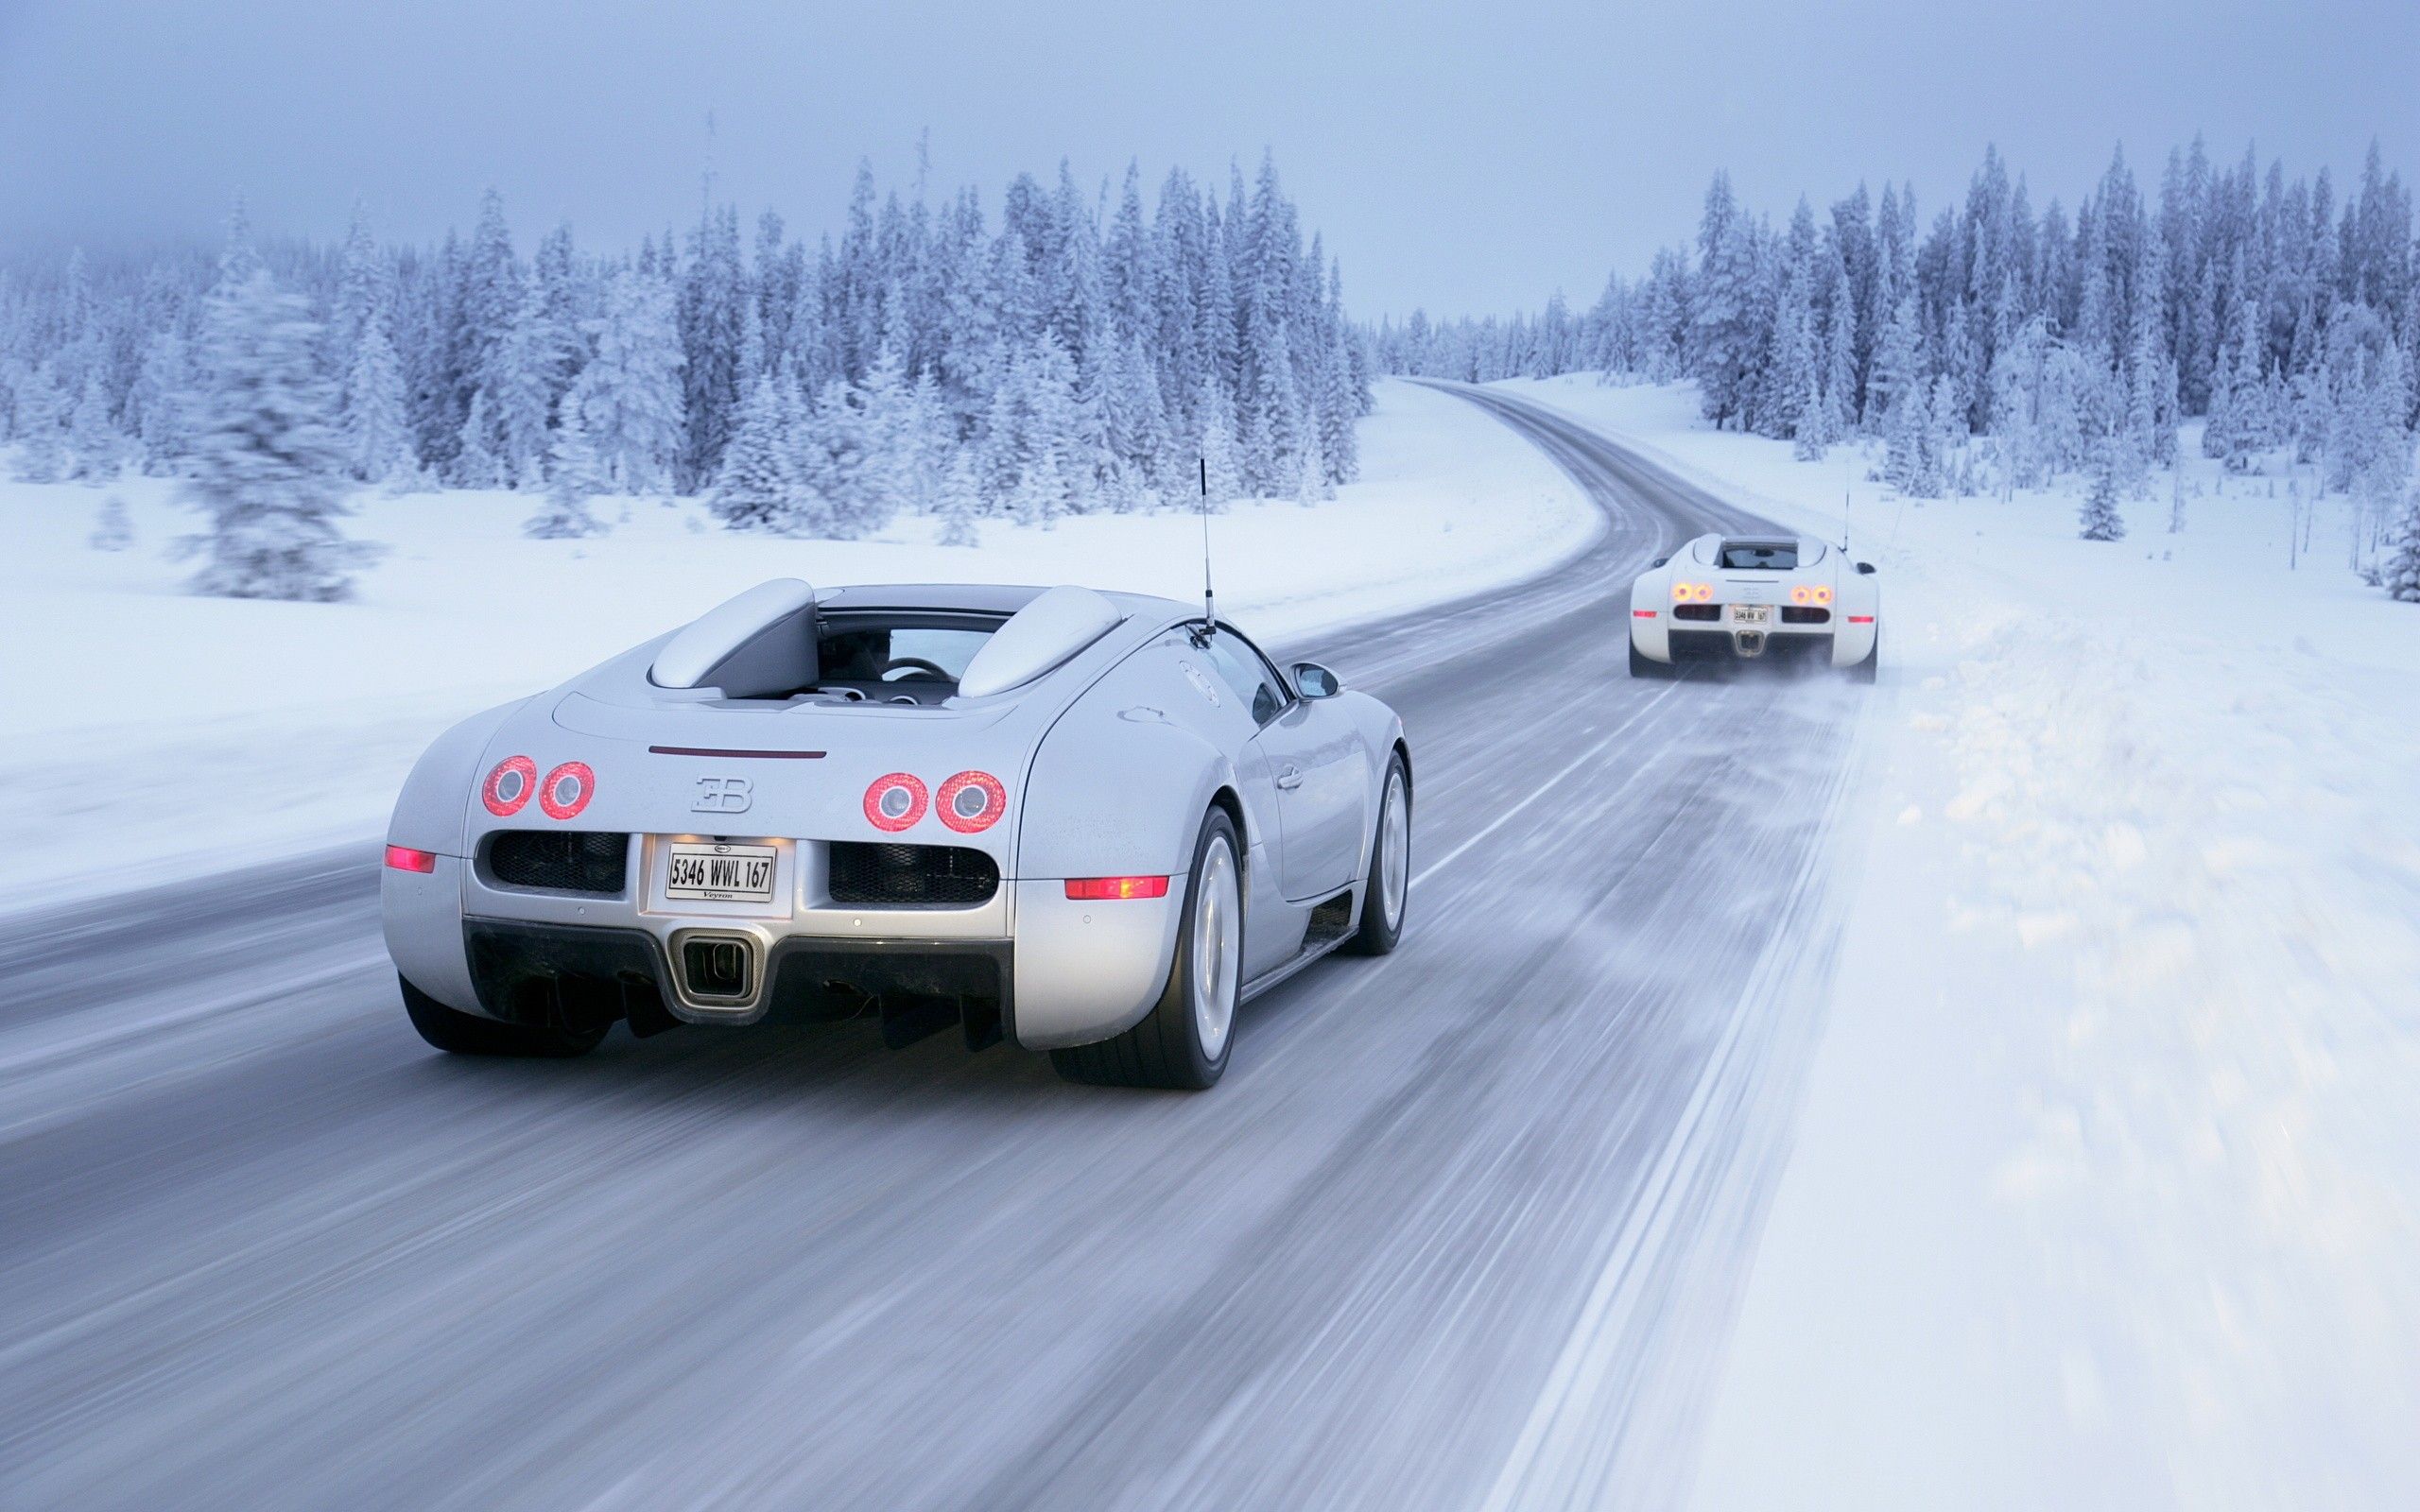 Wallpaper, snow, winter, sports car, Bugatti Veyron, performance car, supercar, land vehicle, automotive design, race car, automobile make, luxury vehicle 2560x1600